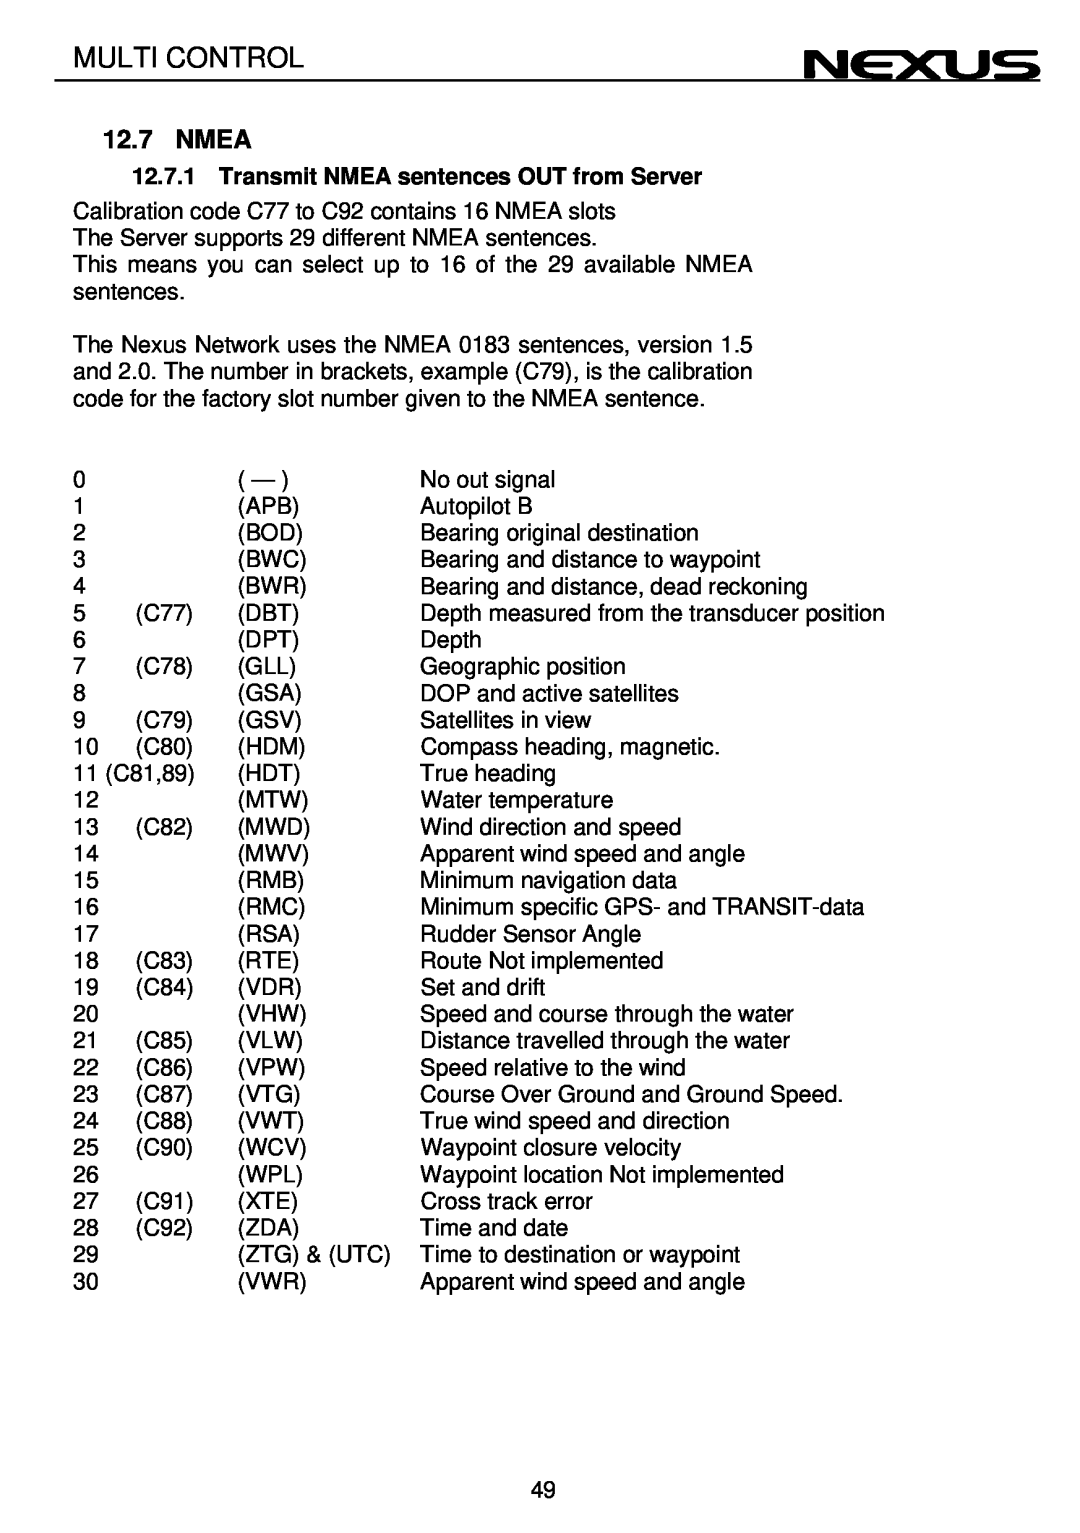 Nexus 21 Multi Control operation manual 12.7NMEA, 12.7.1Transmit NMEA sentences OUT from Server 